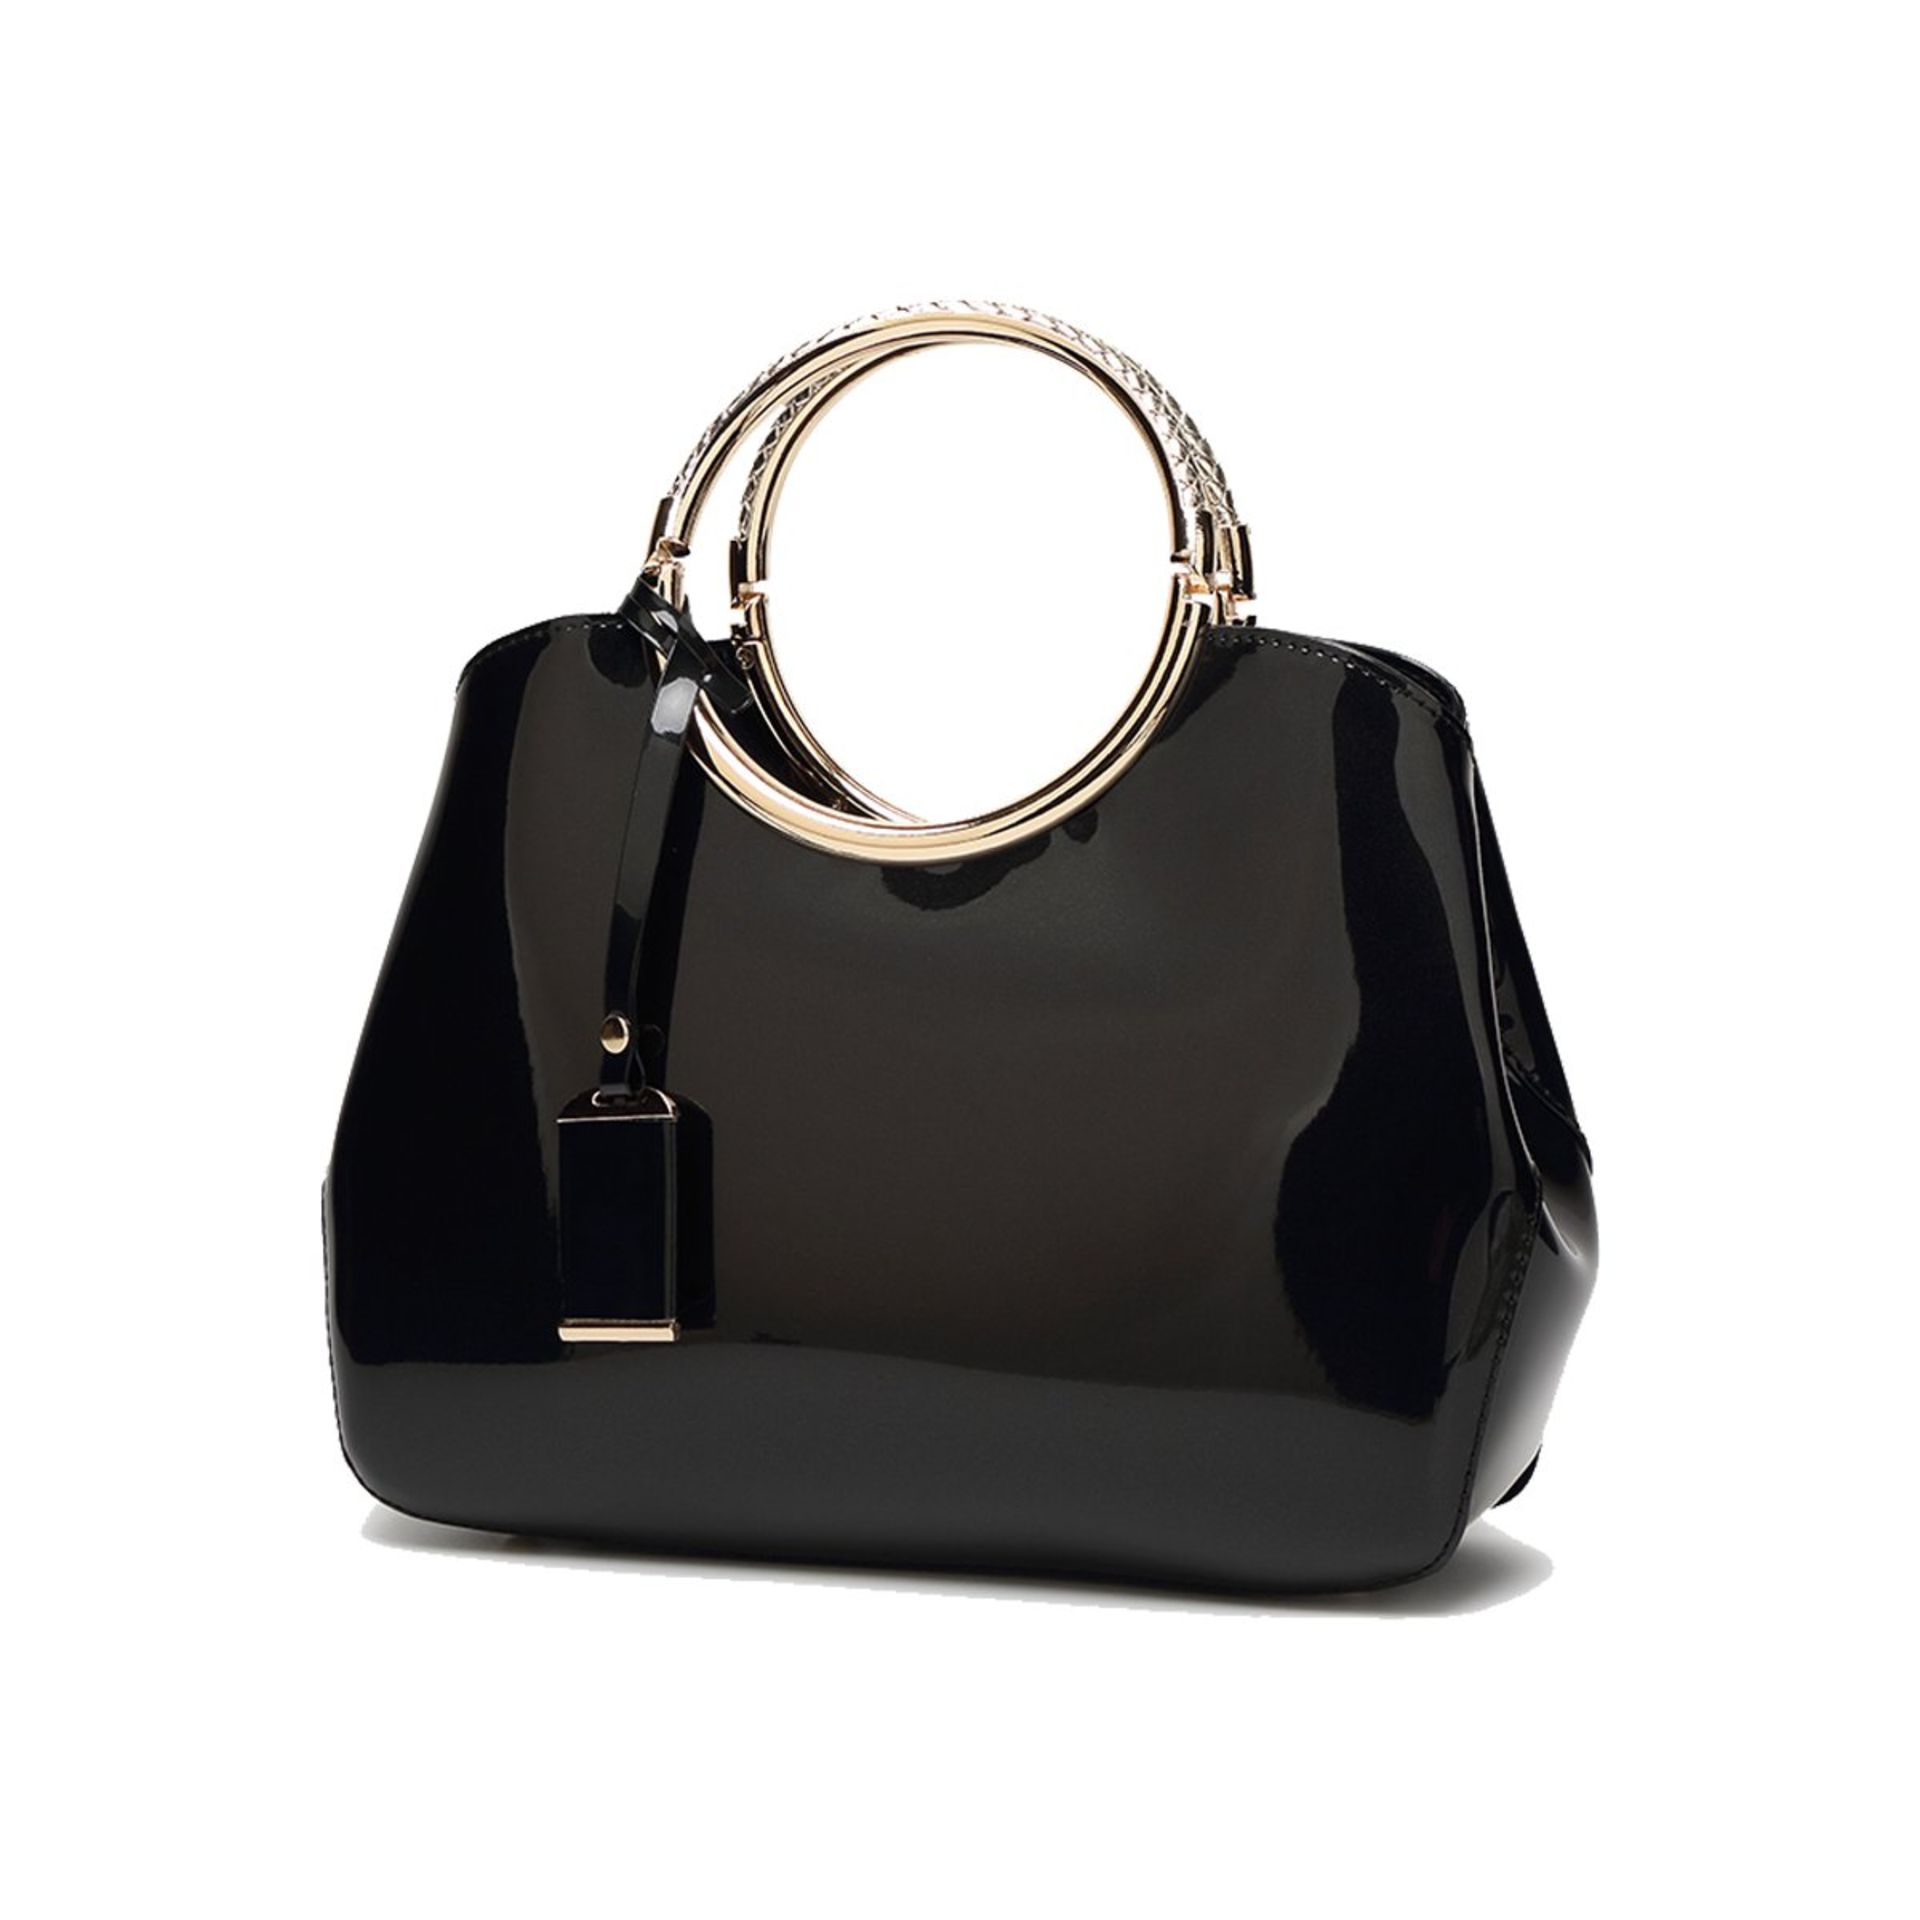 Brand New Women's Coolives Golden Strap Handbag in Black RRP £44.99